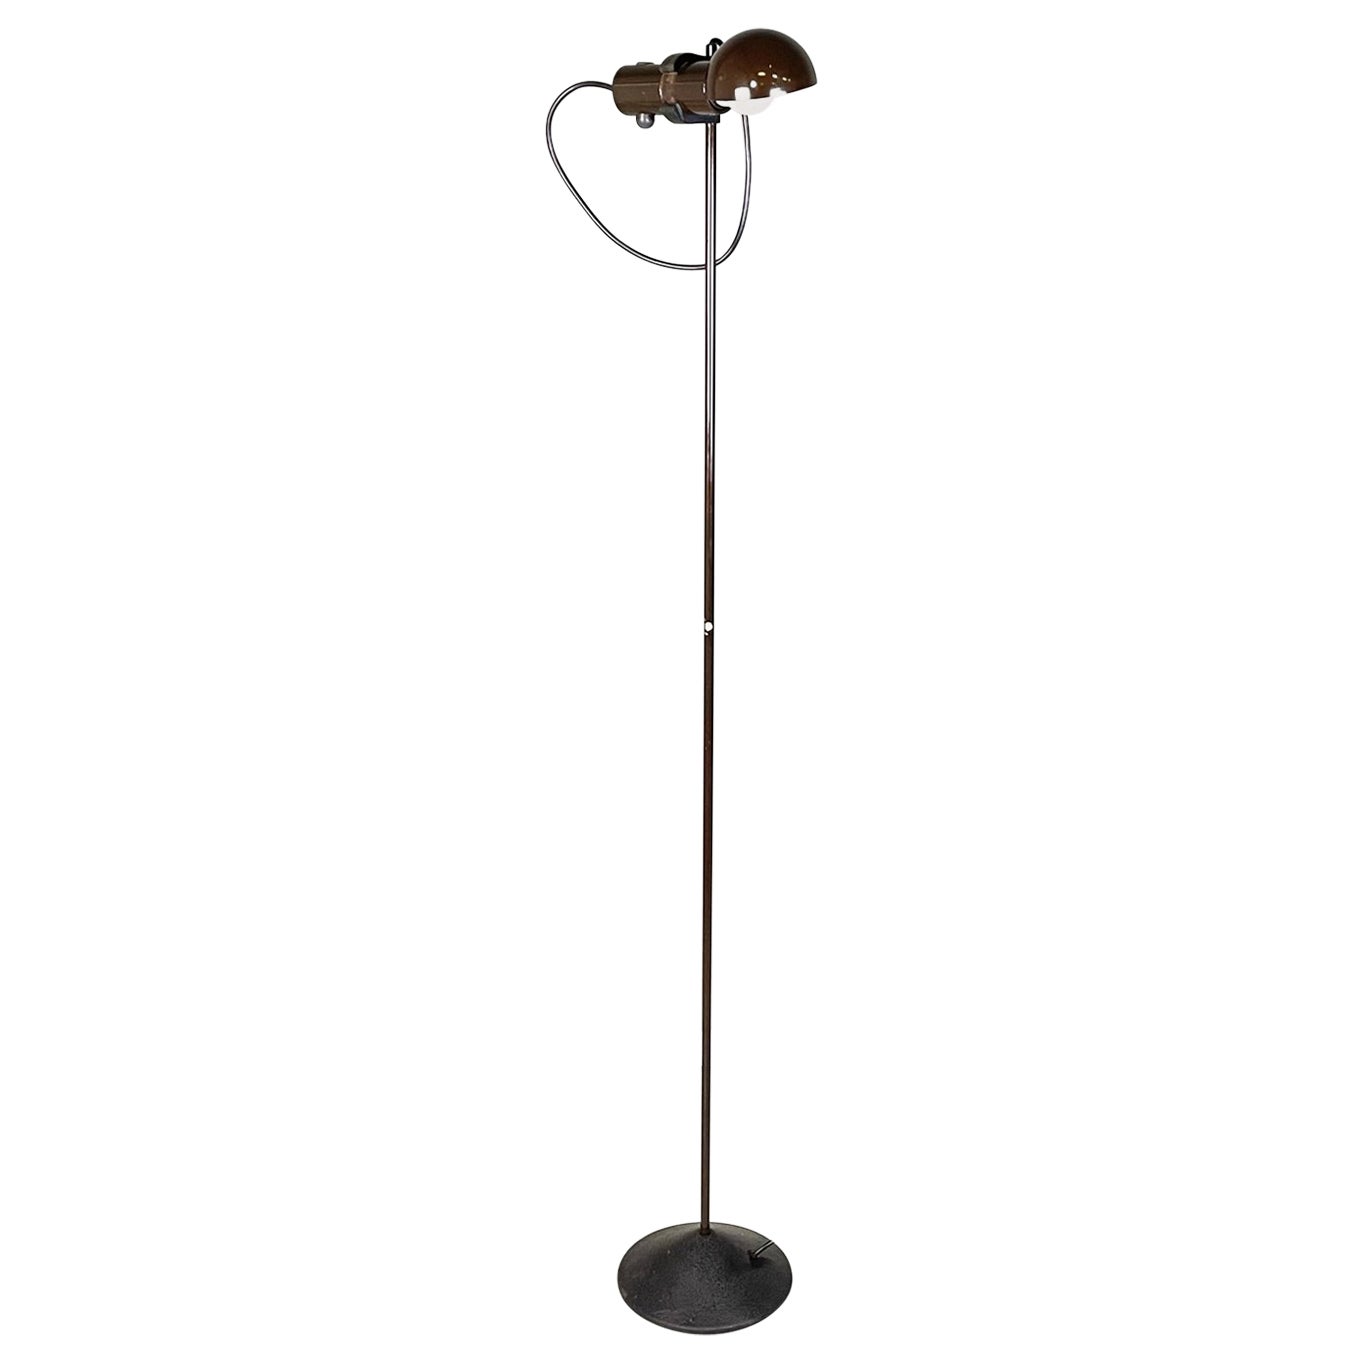 Italian modern Adjustable floor lamp in brown metal by Tronconi, 1970s For Sale